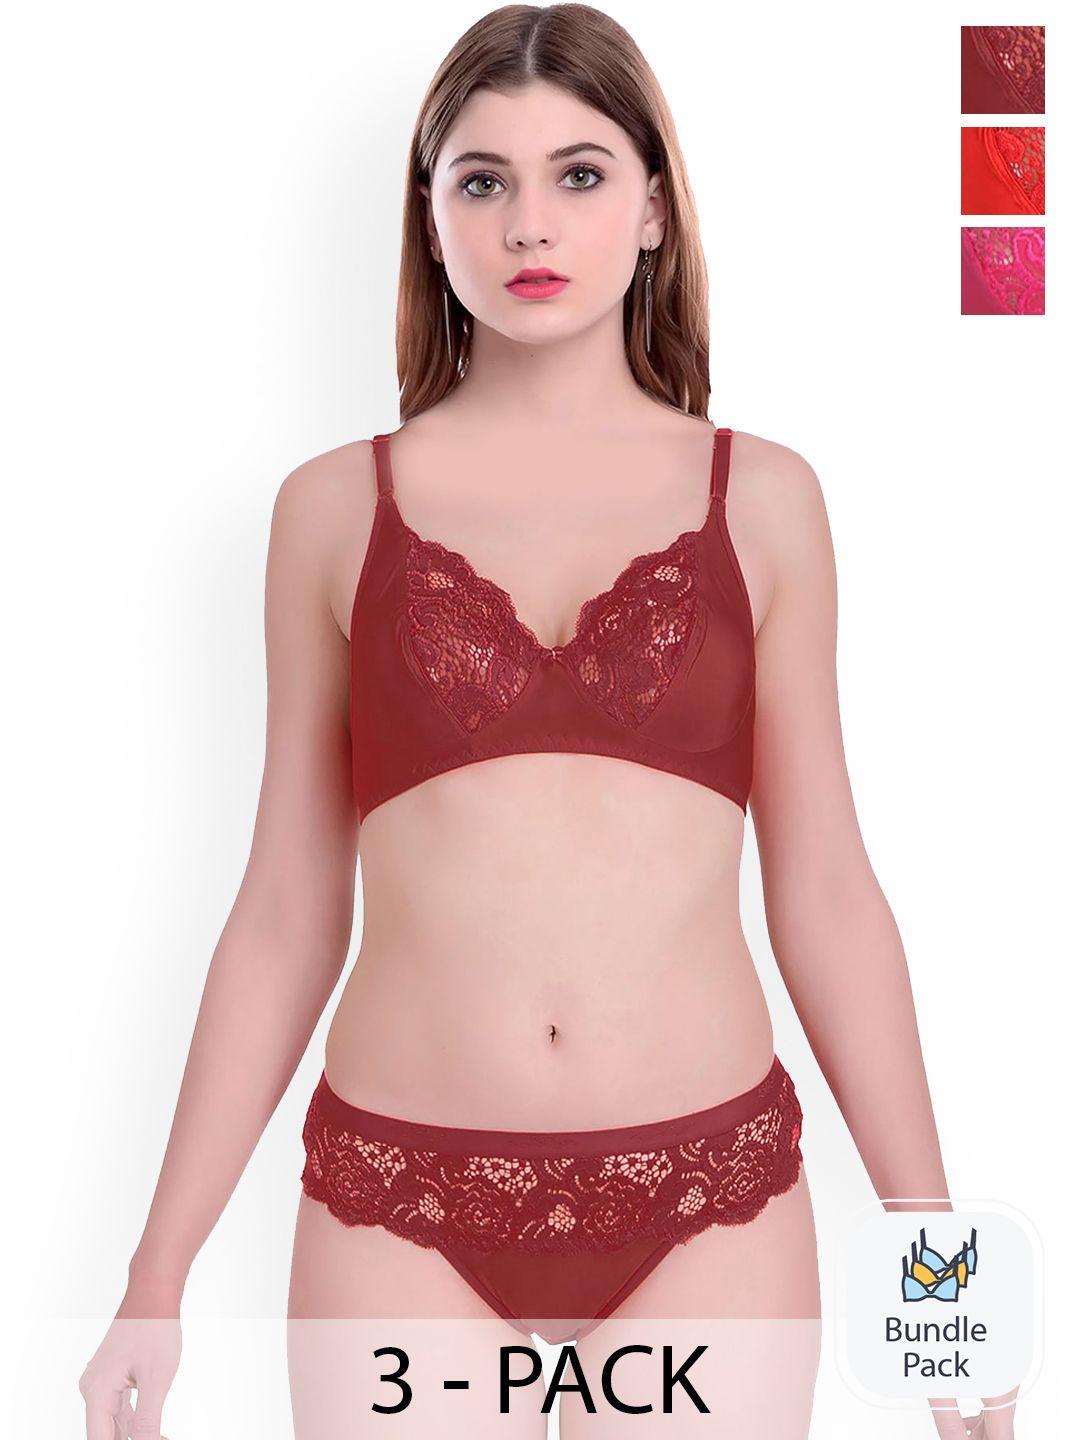 aamarsh pack of 3 self-designed cotton lingerie set ap_q_cate set _pink,red,maroon_30